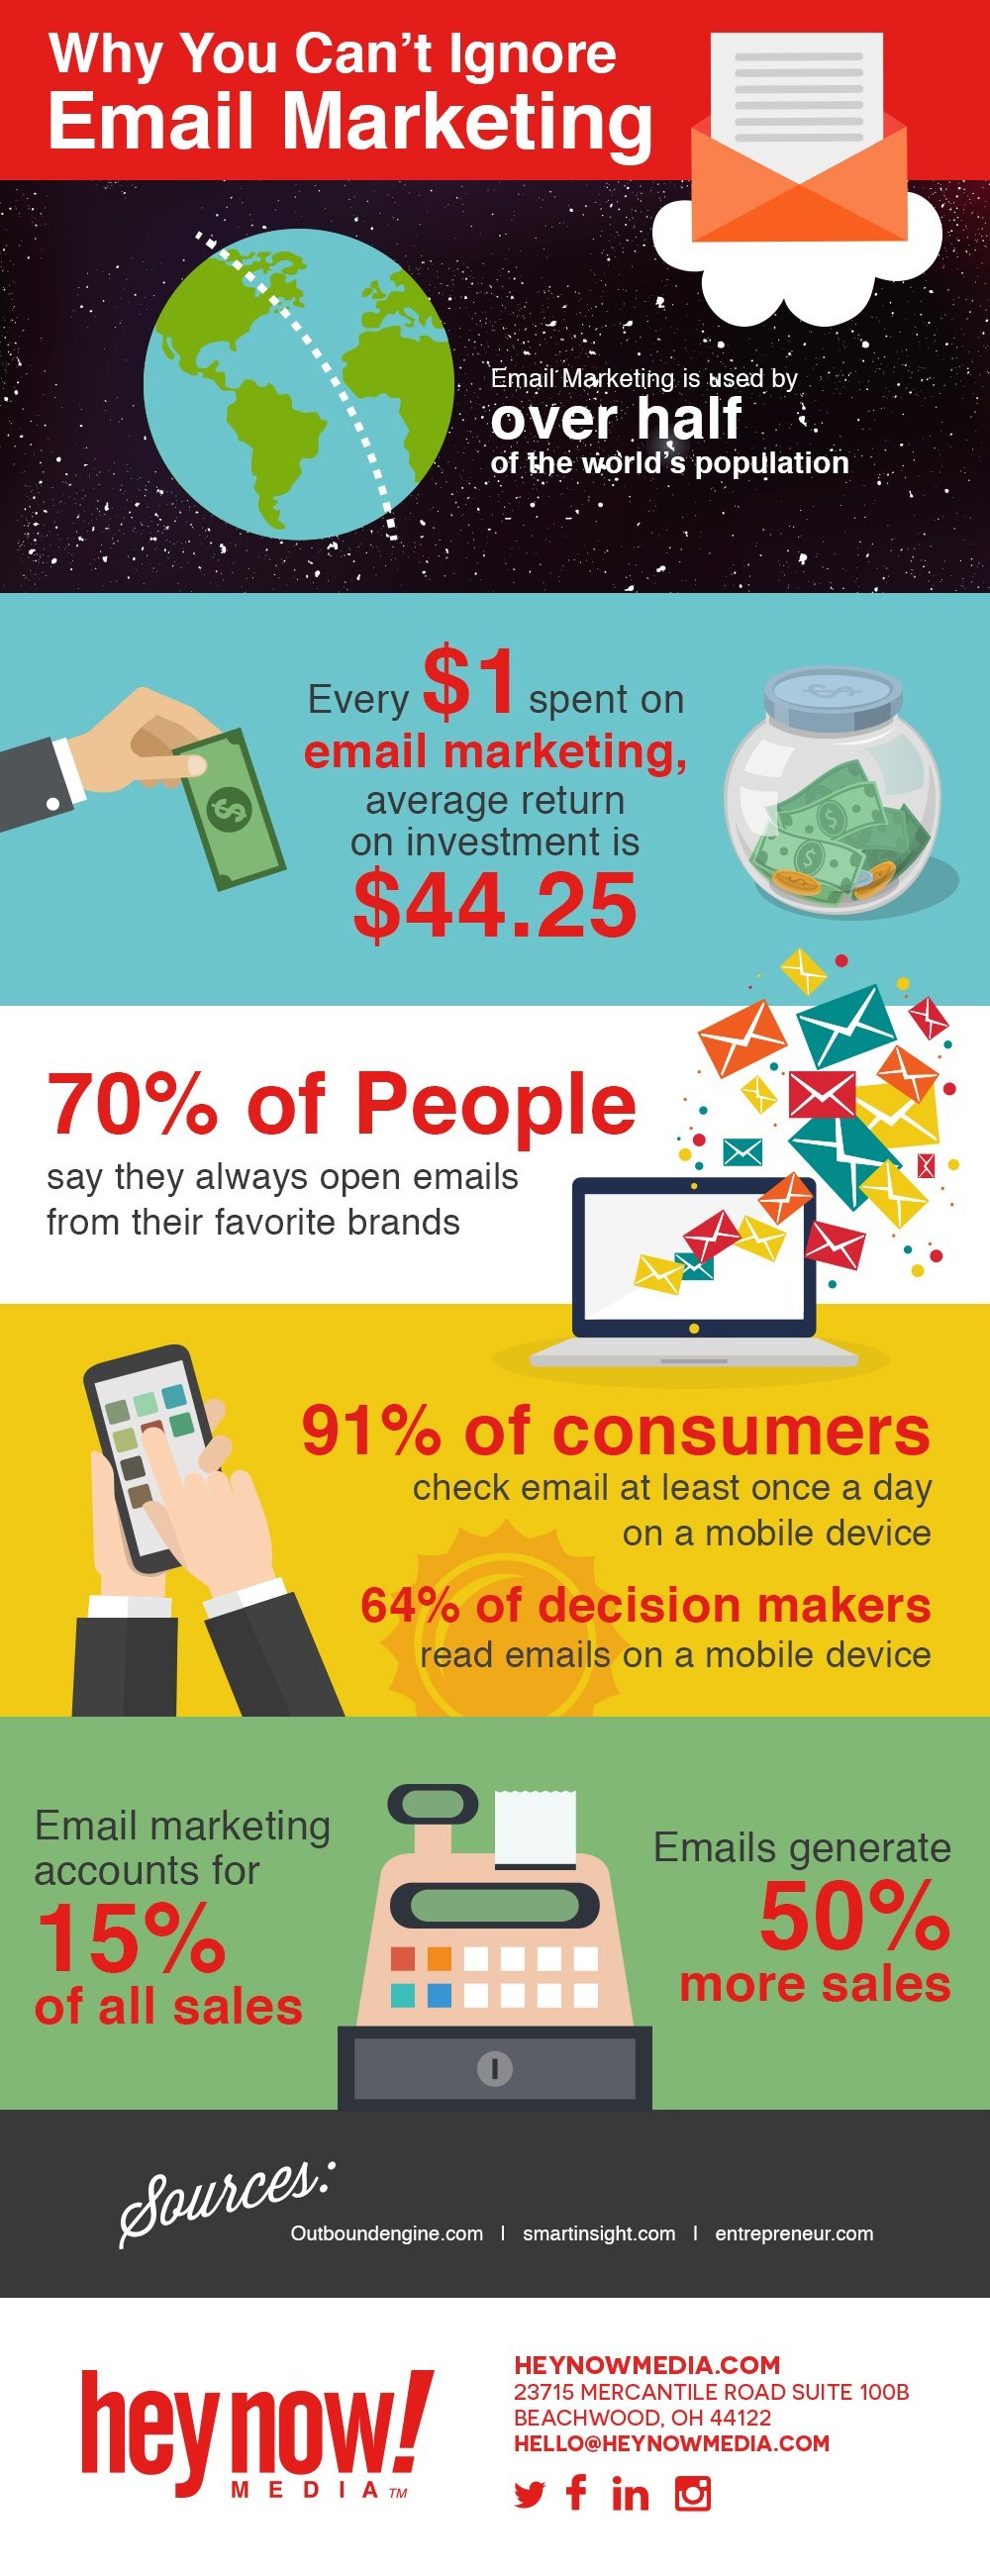 Email-Marketing-Infographic-1.jpg